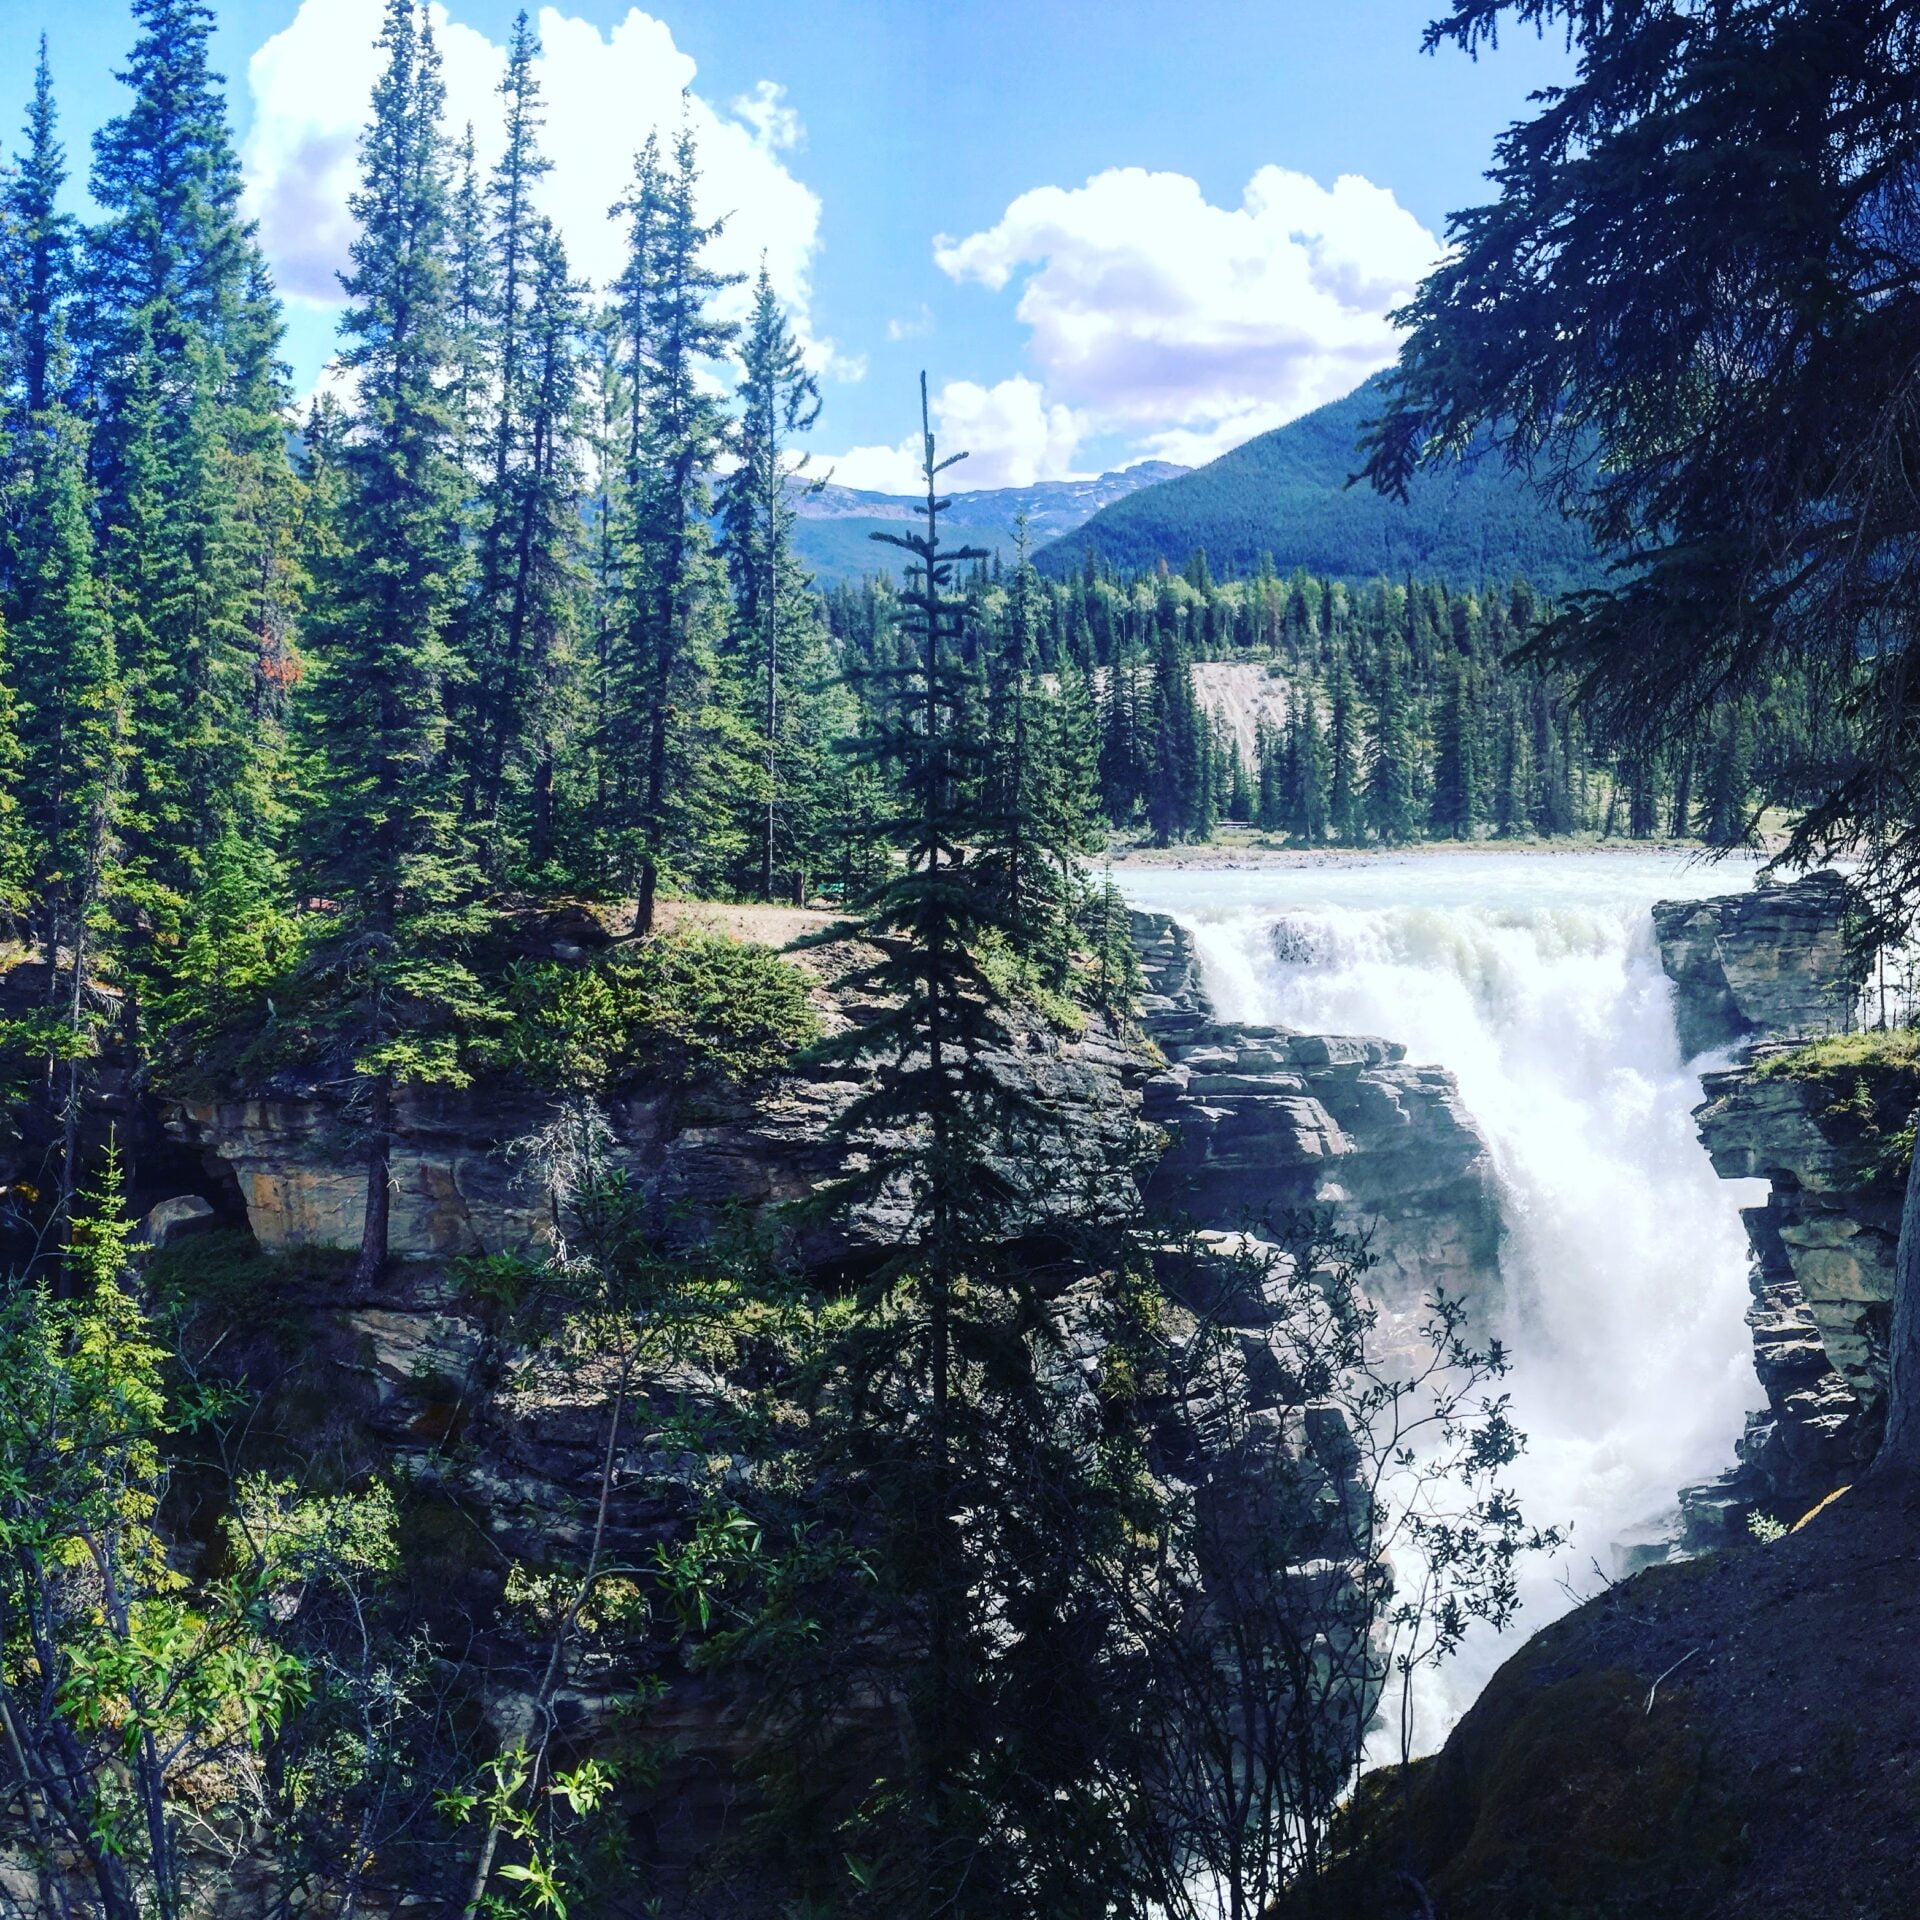 Athabaska Falls, Jasper, AB, Canada